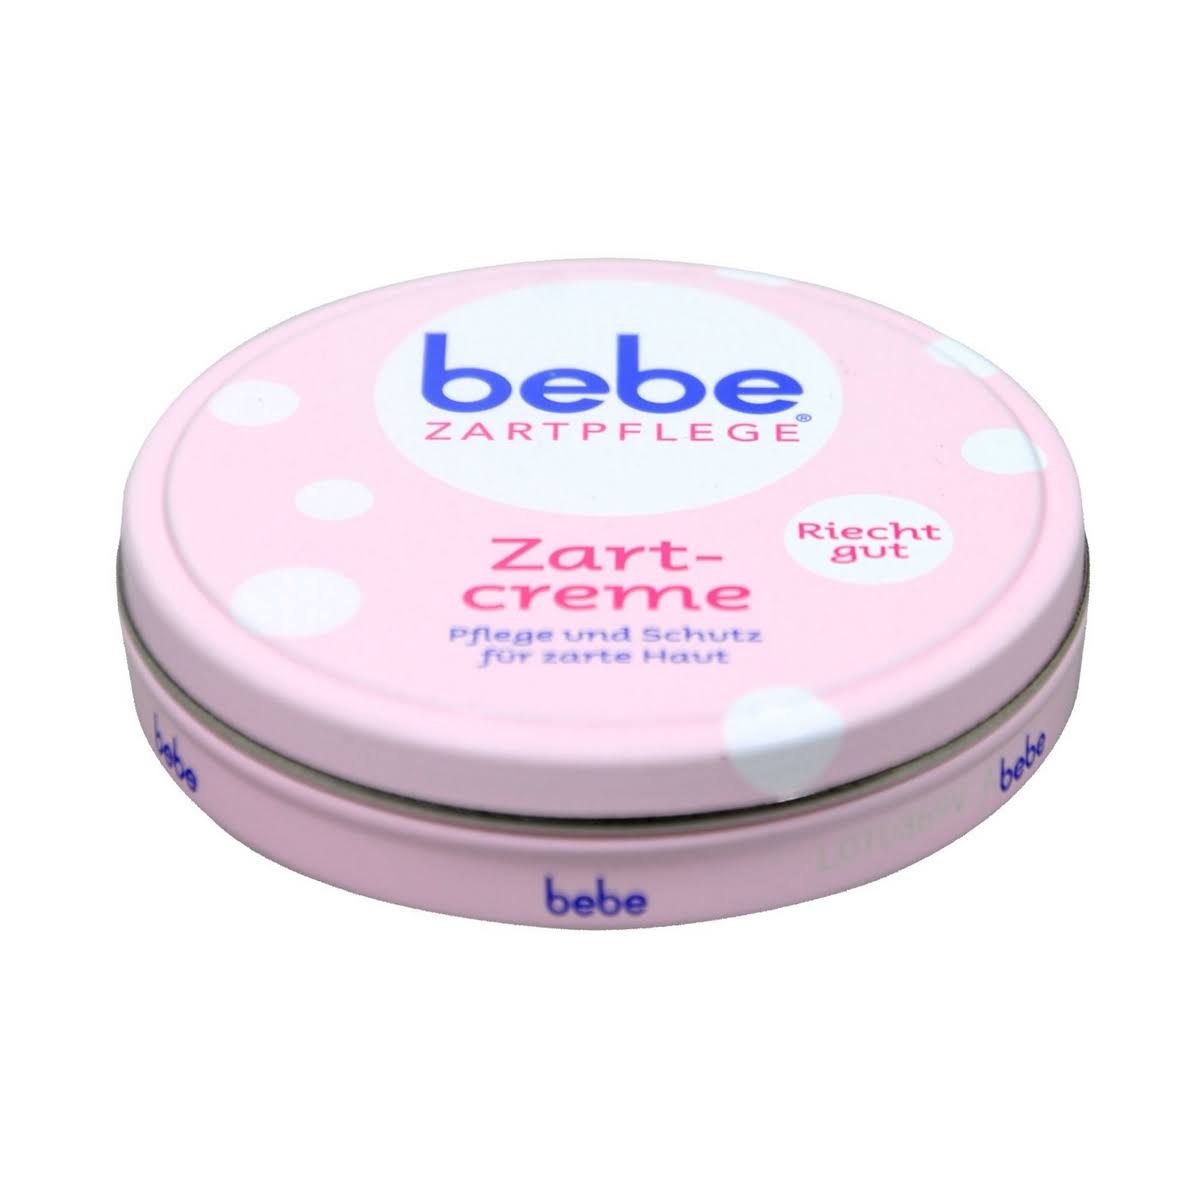 Bebe Zartcreme Baby Cream Travel Size 25 ml 0.84 oz